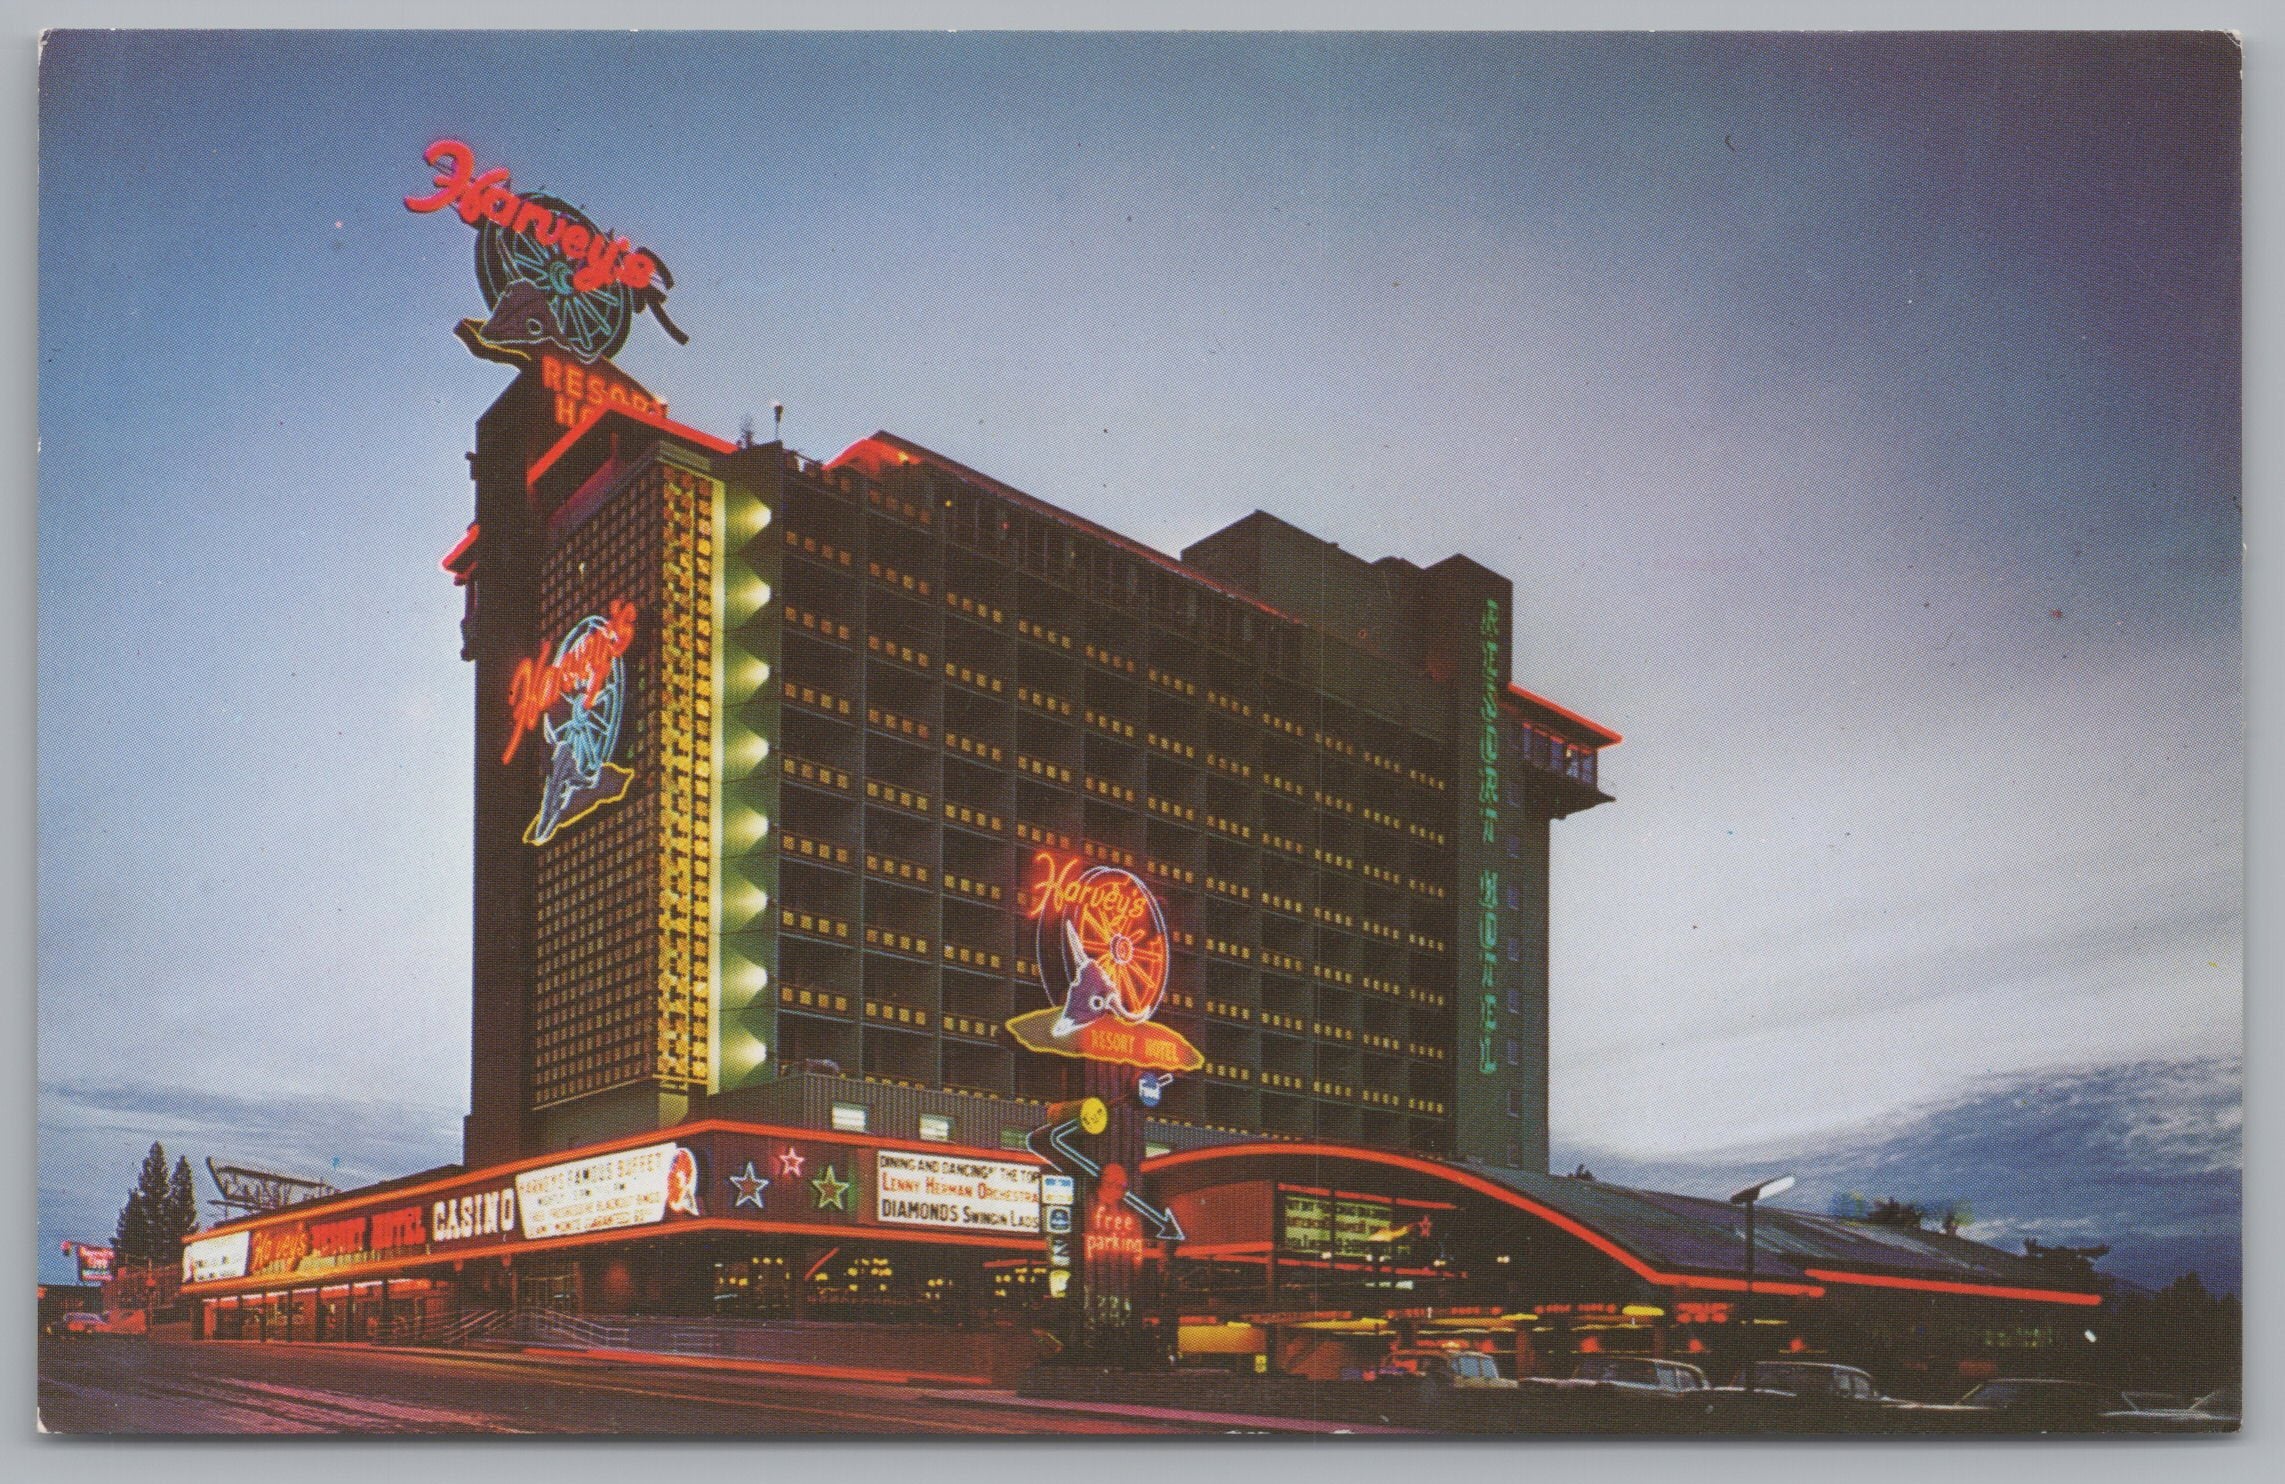 Harvey’s Resort Hotel, South Lake Tahoe, Nevada, USA, Vintage Post Card.